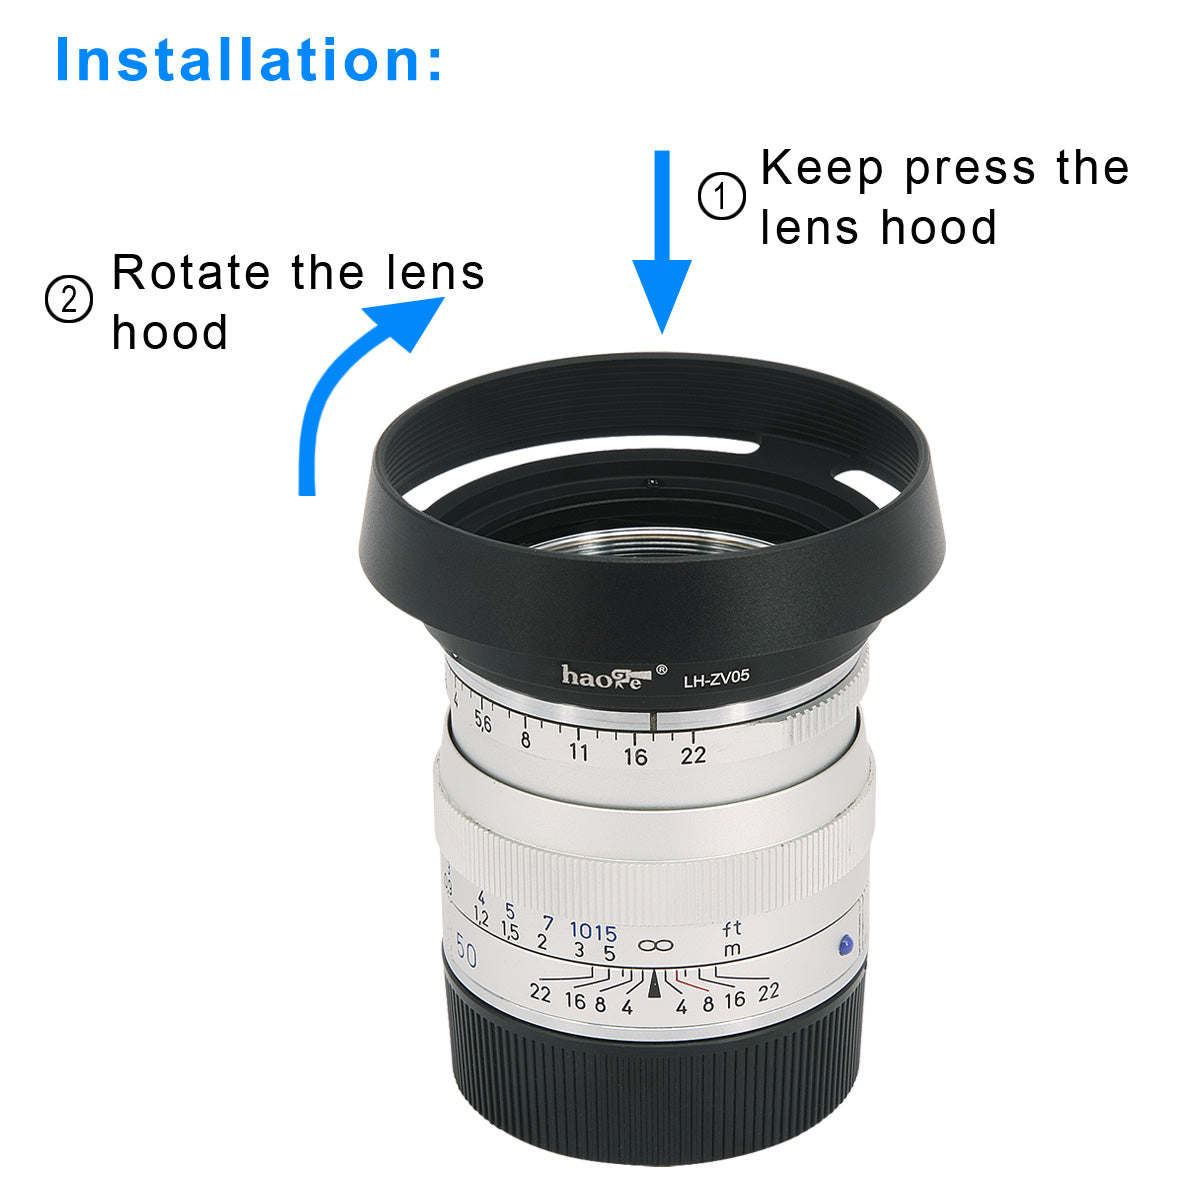 Haoge LH-ZV05 Round Metal Lens Hood for Carl Zeiss Biogon T* 2/35 35mm f2 ZM, C Biogon T* 2.8/35 35mm f2.8 ZM, Planar T* 2/50 50mm f2 ZM; Voigtlander NOKTON CLASSIC 35mm f1.4 VM, 40mm f1.4 VM Lens